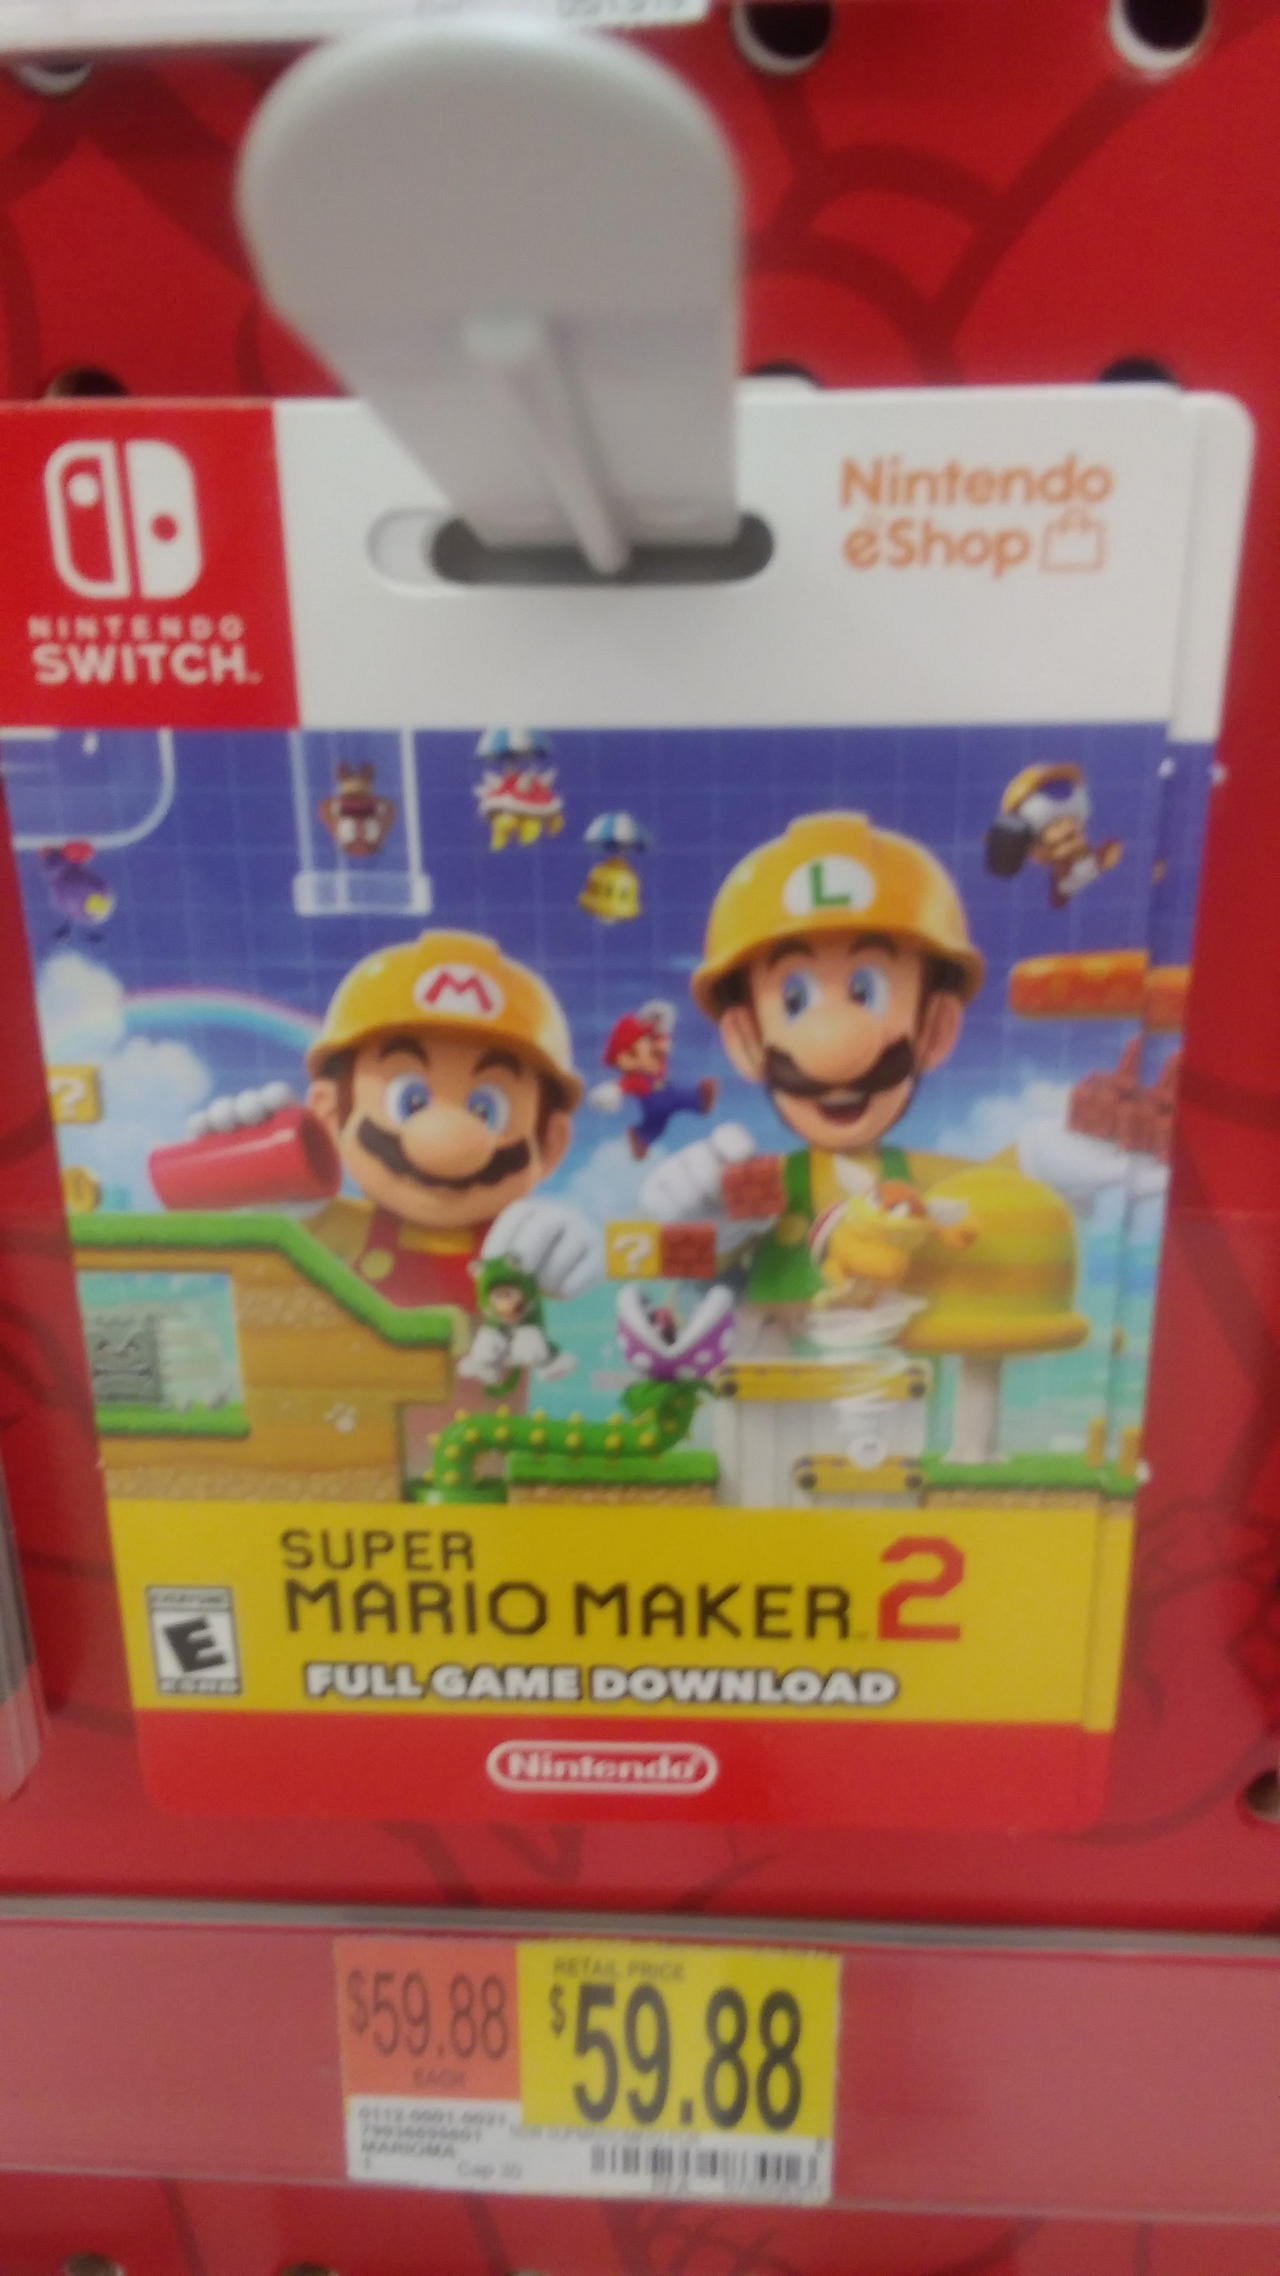 Free update for Super Mario Maker 2! - Gamecardsdirect